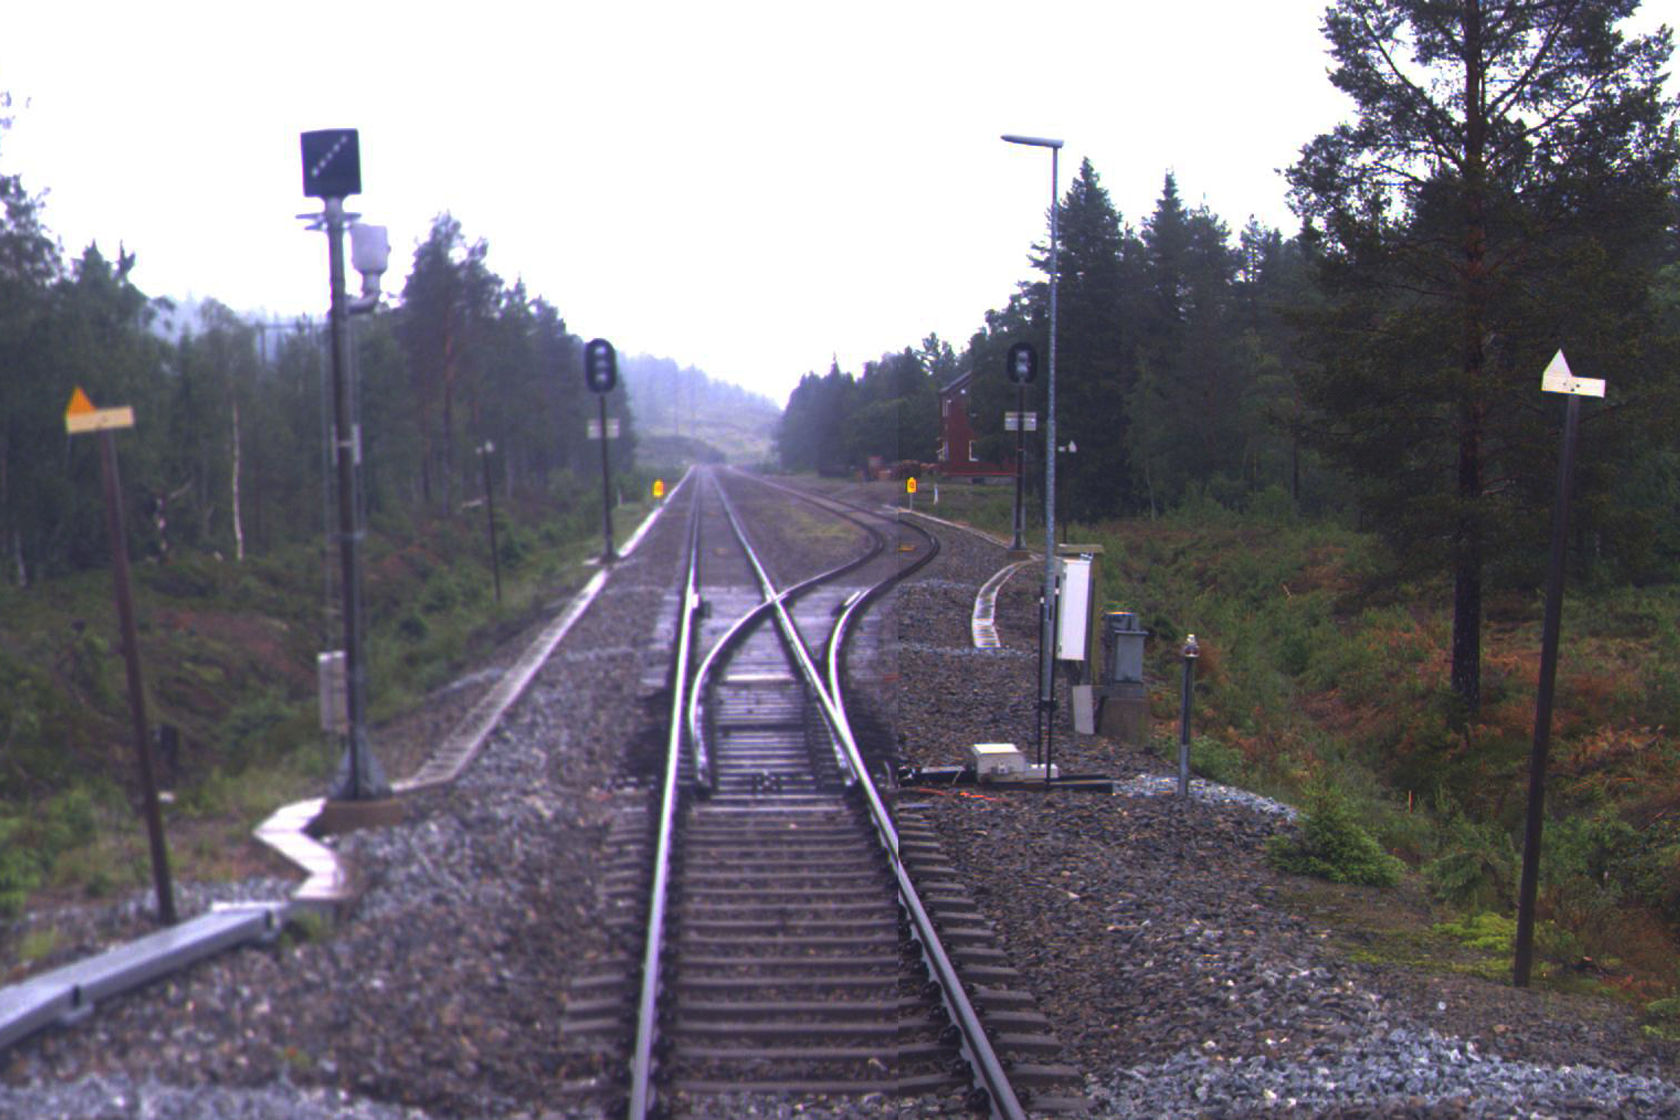 Tracks at Agle station.